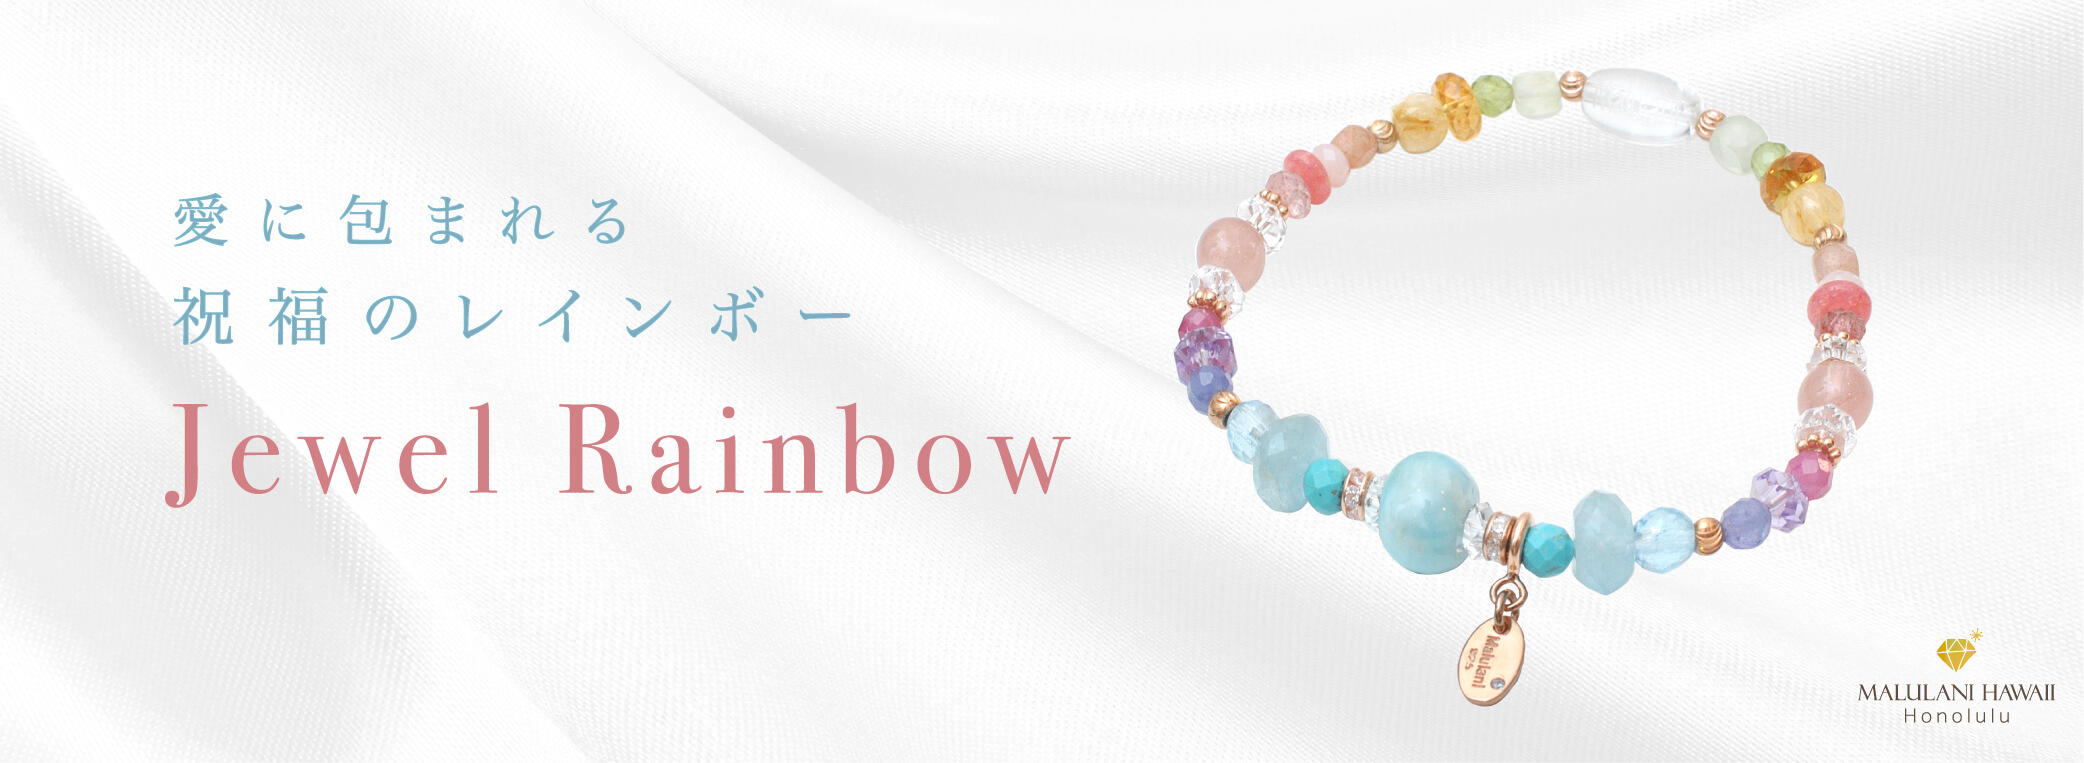 Jewel Rainbowの画像